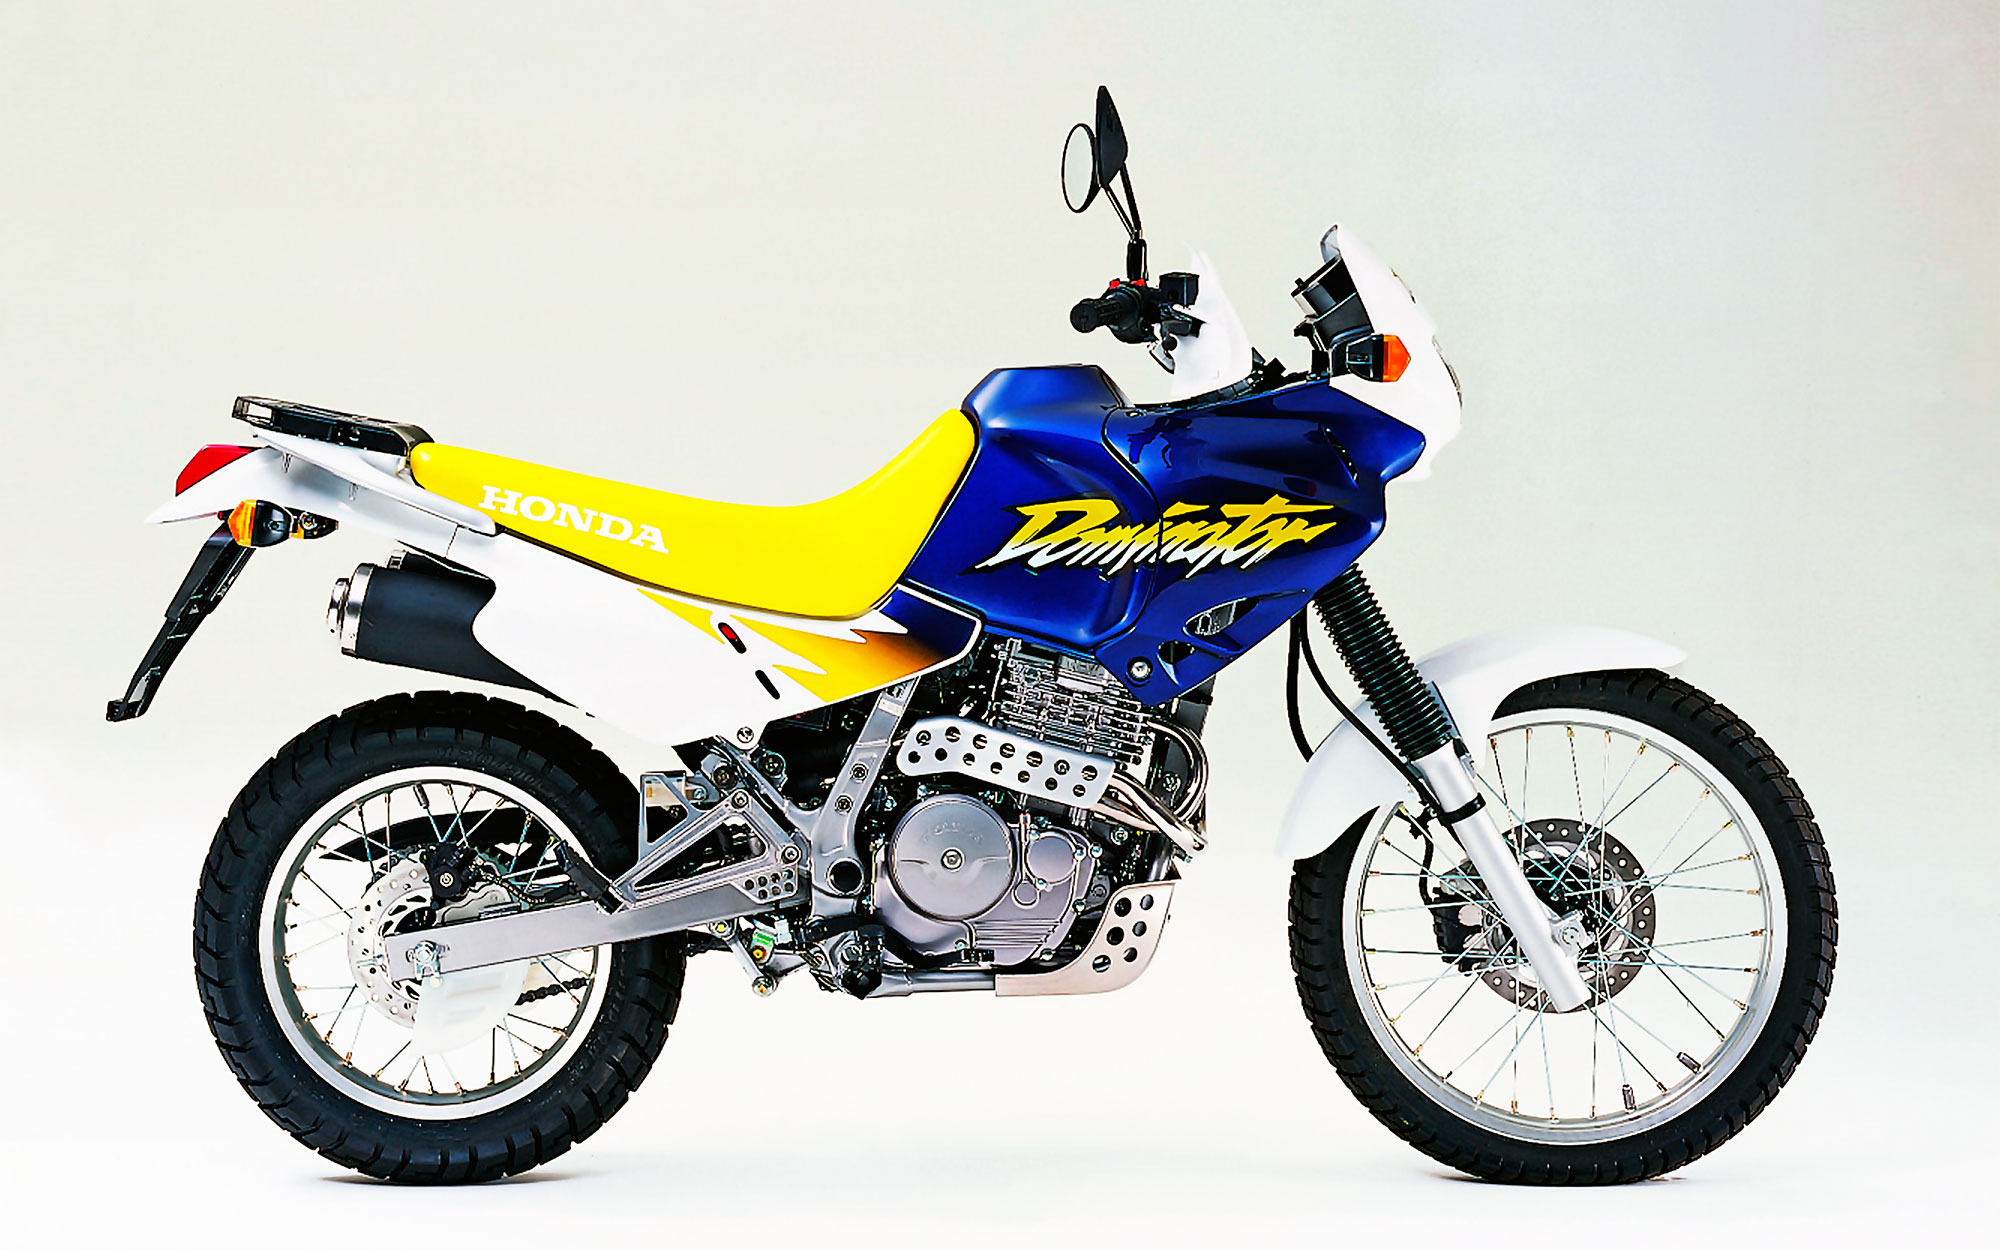 Мотоцикл Honda NX 650 Dominator 1997 Цена, Фото